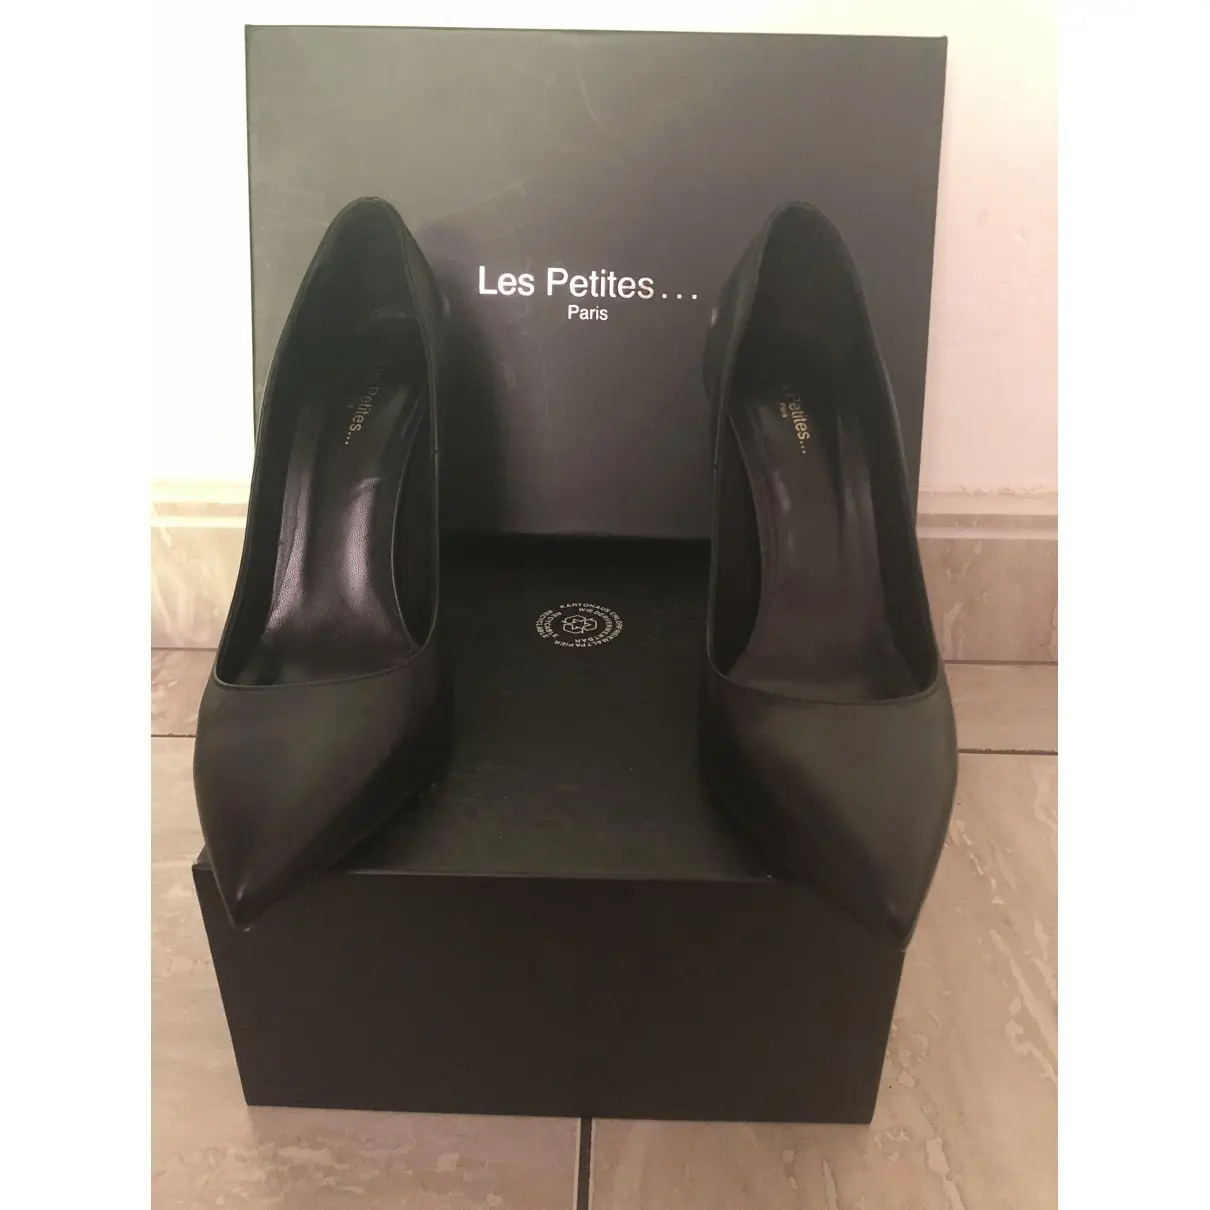 Buy Les Petites Leather heels online